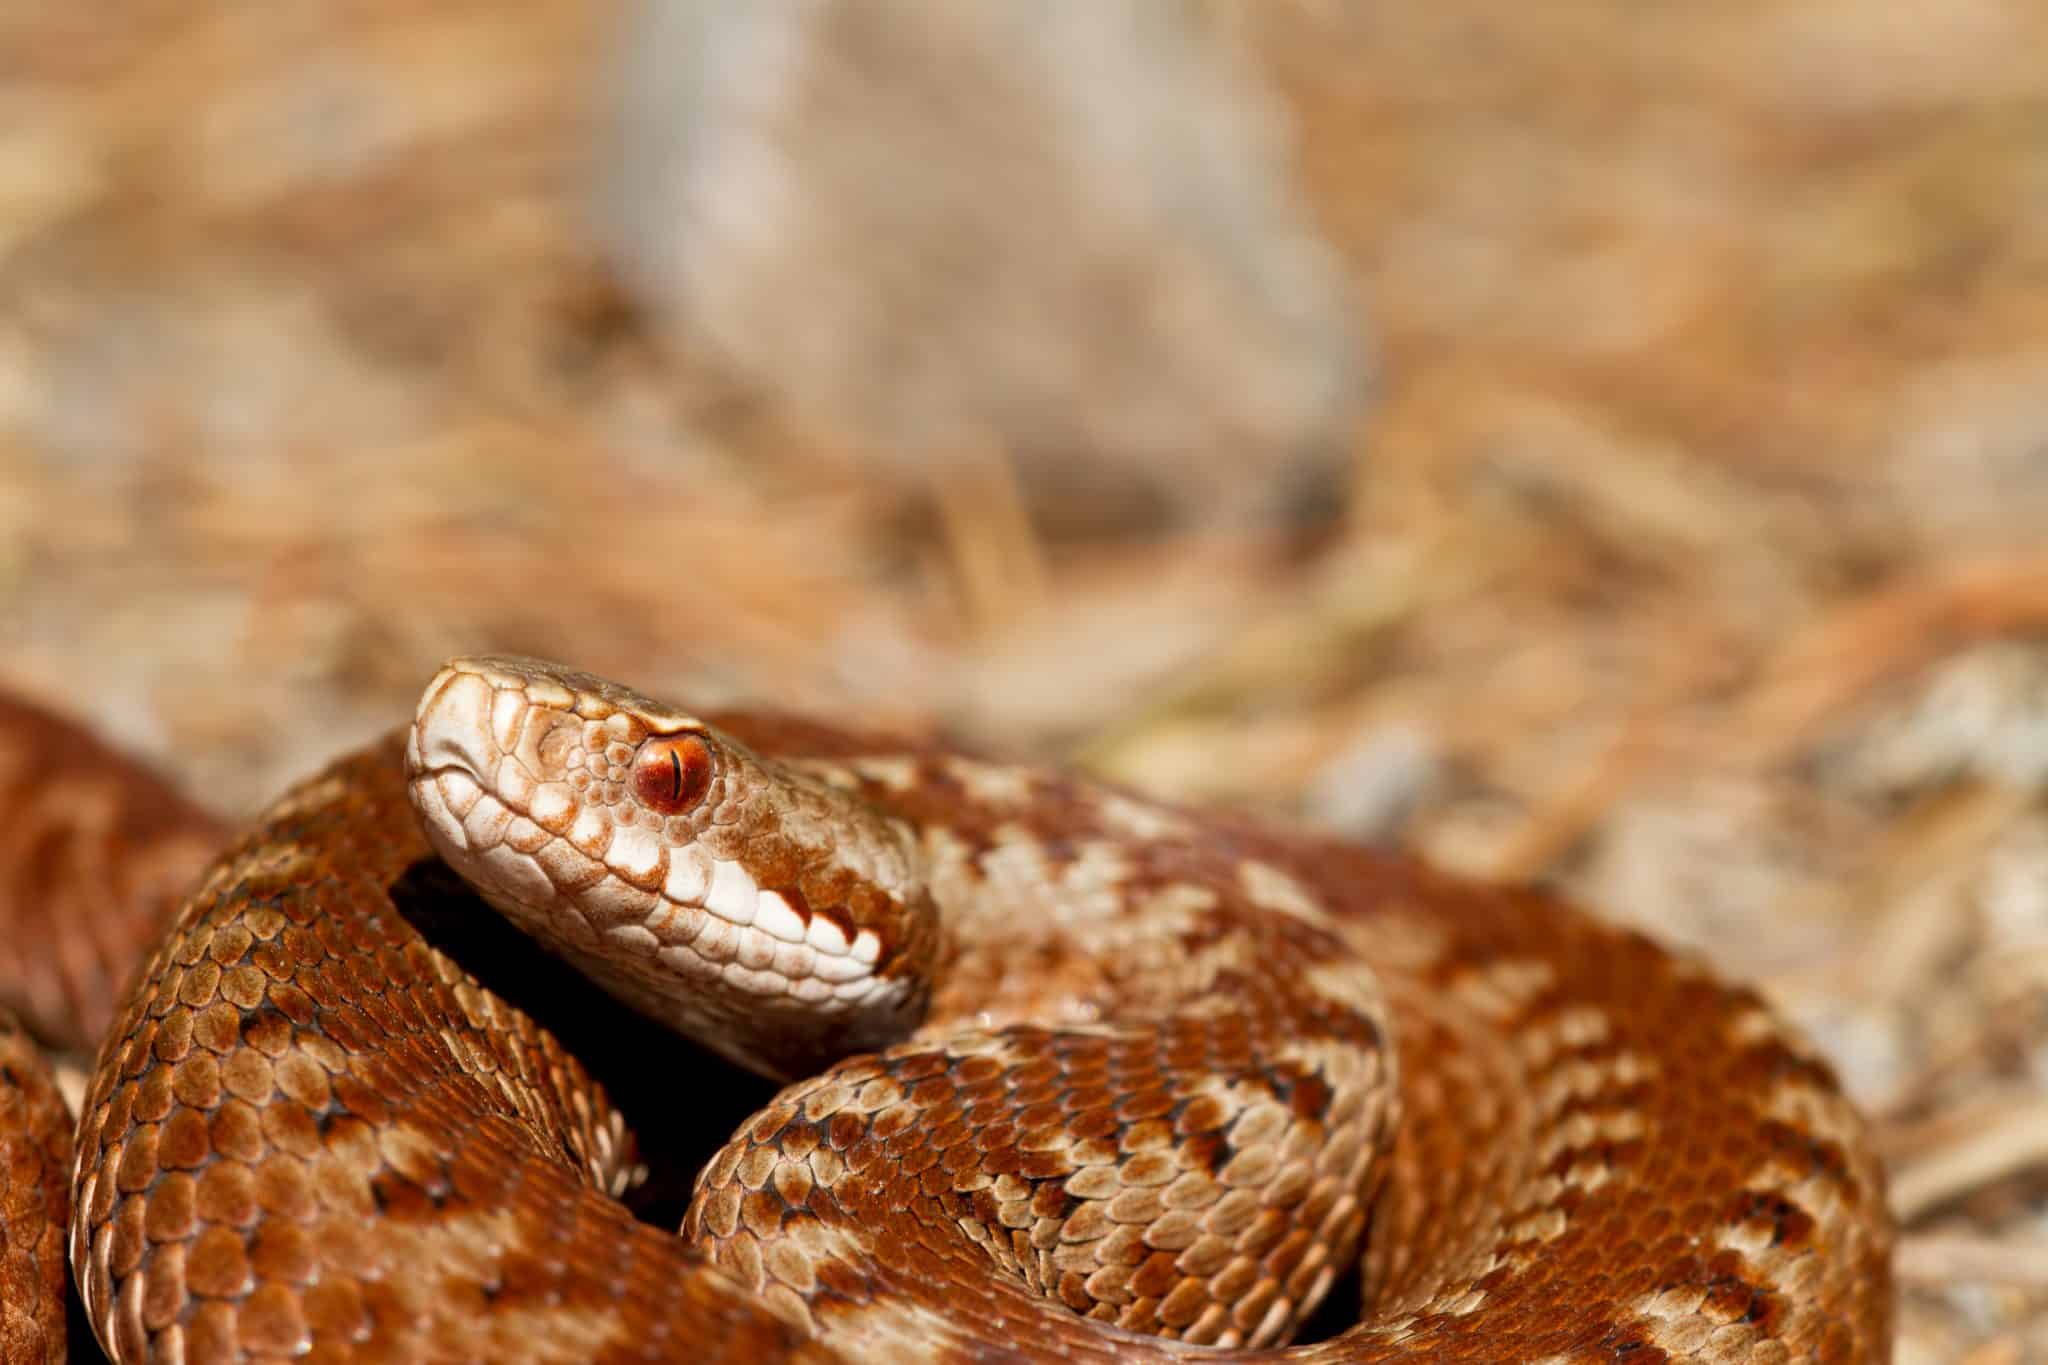 brown snake on ground